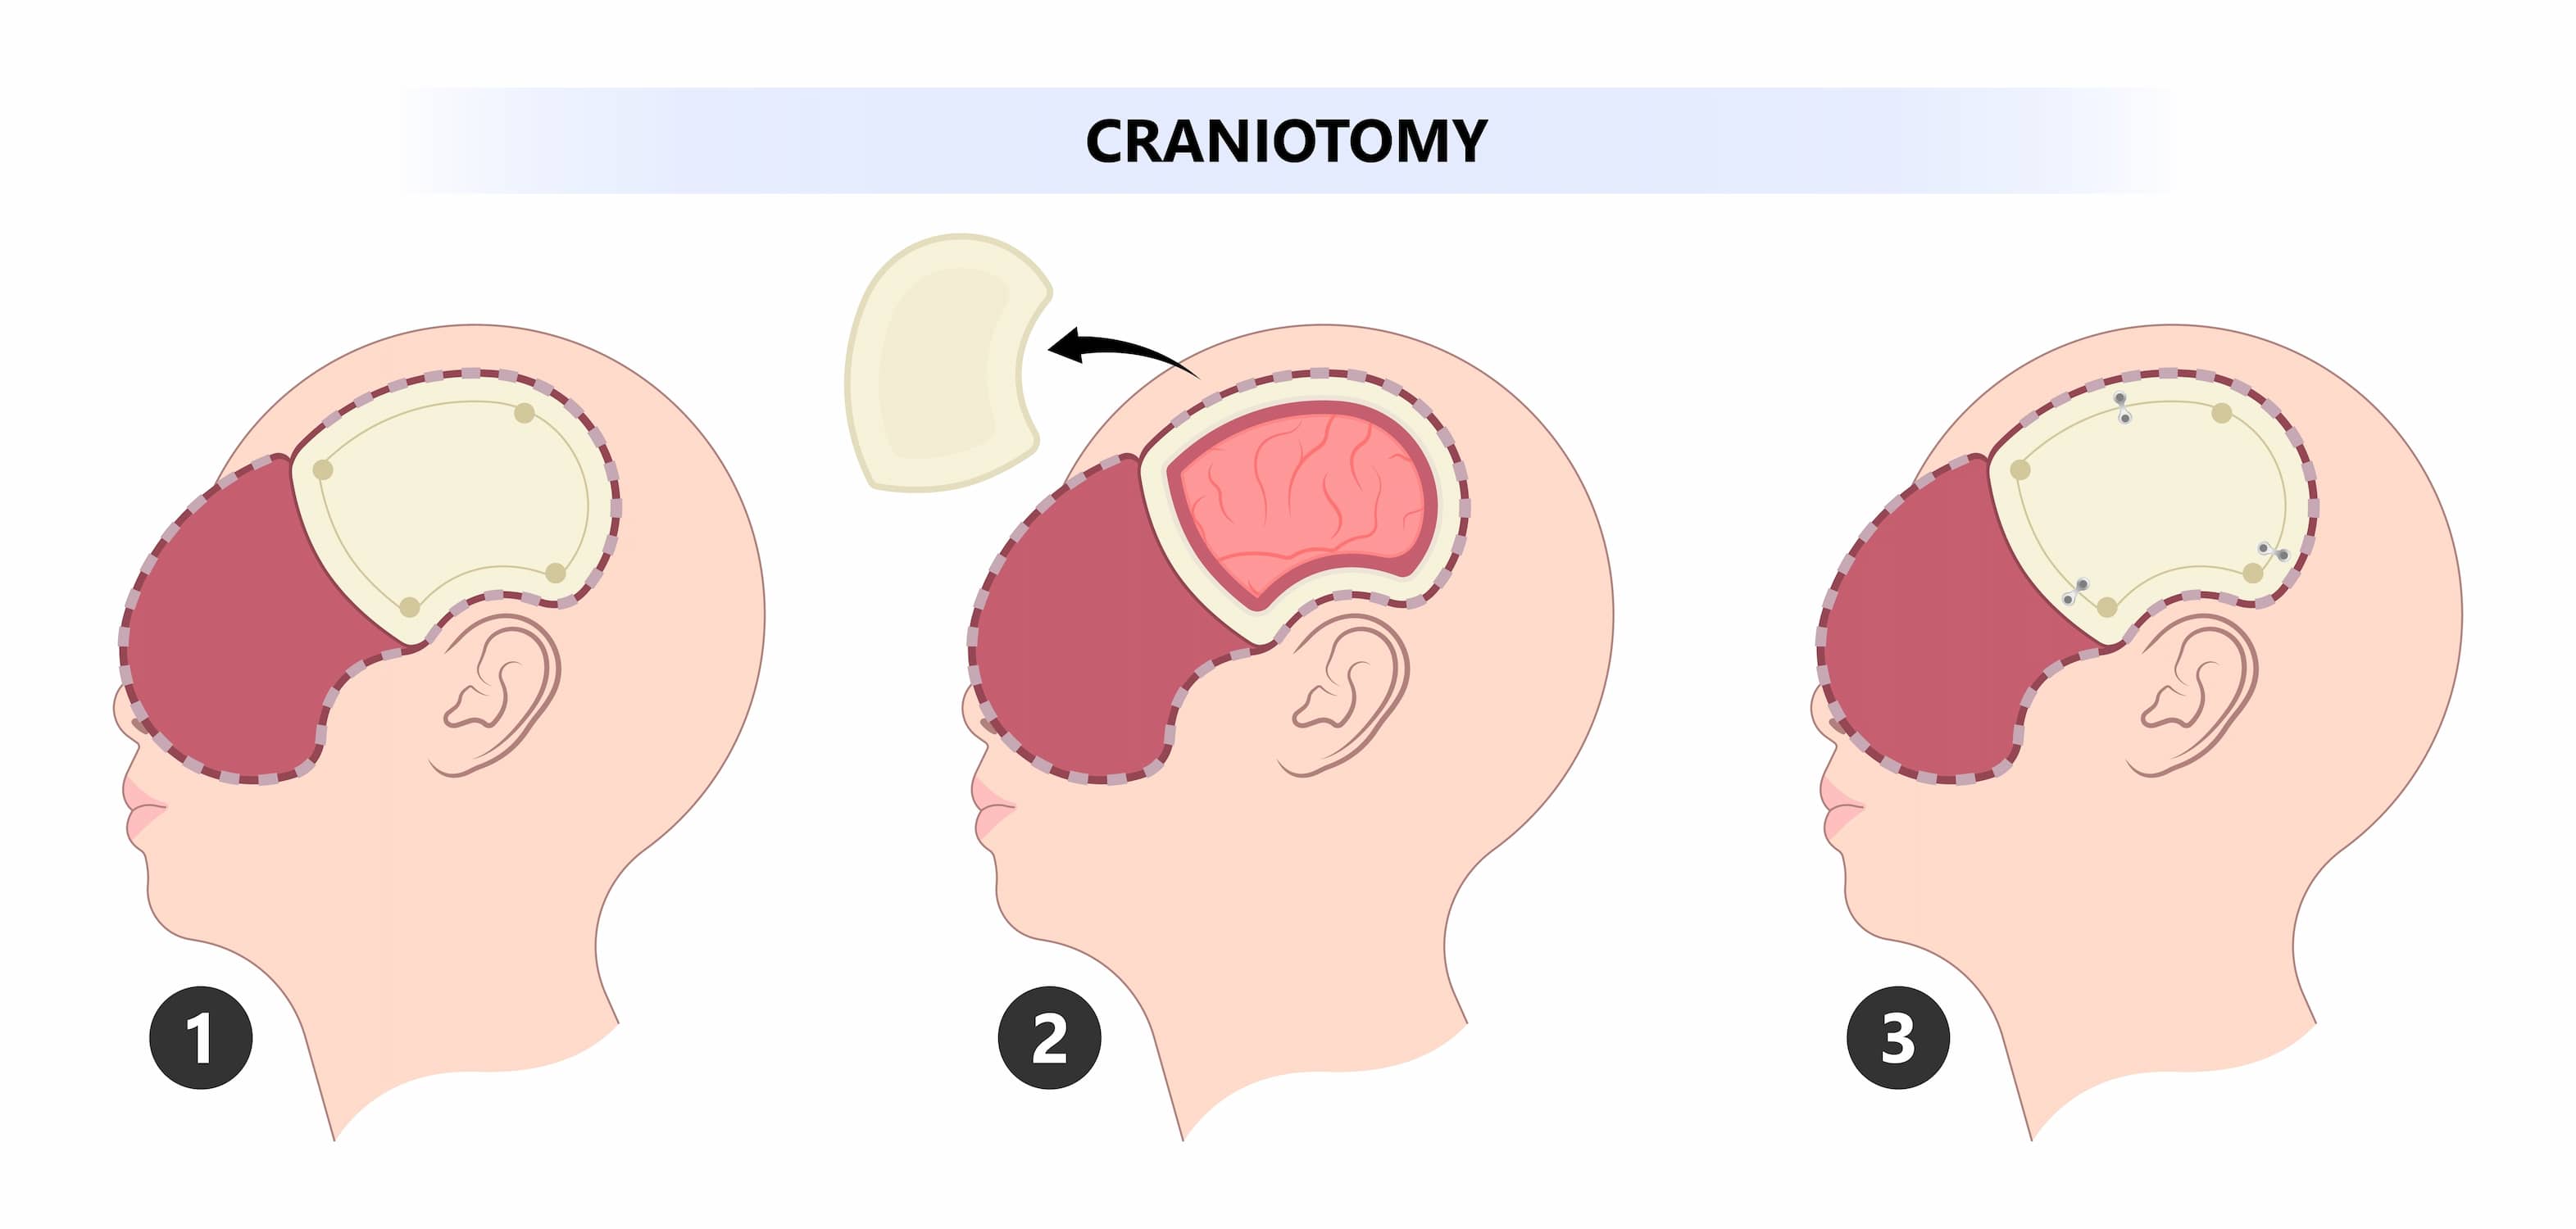 Turkiye craniotomy for brain tumor resection